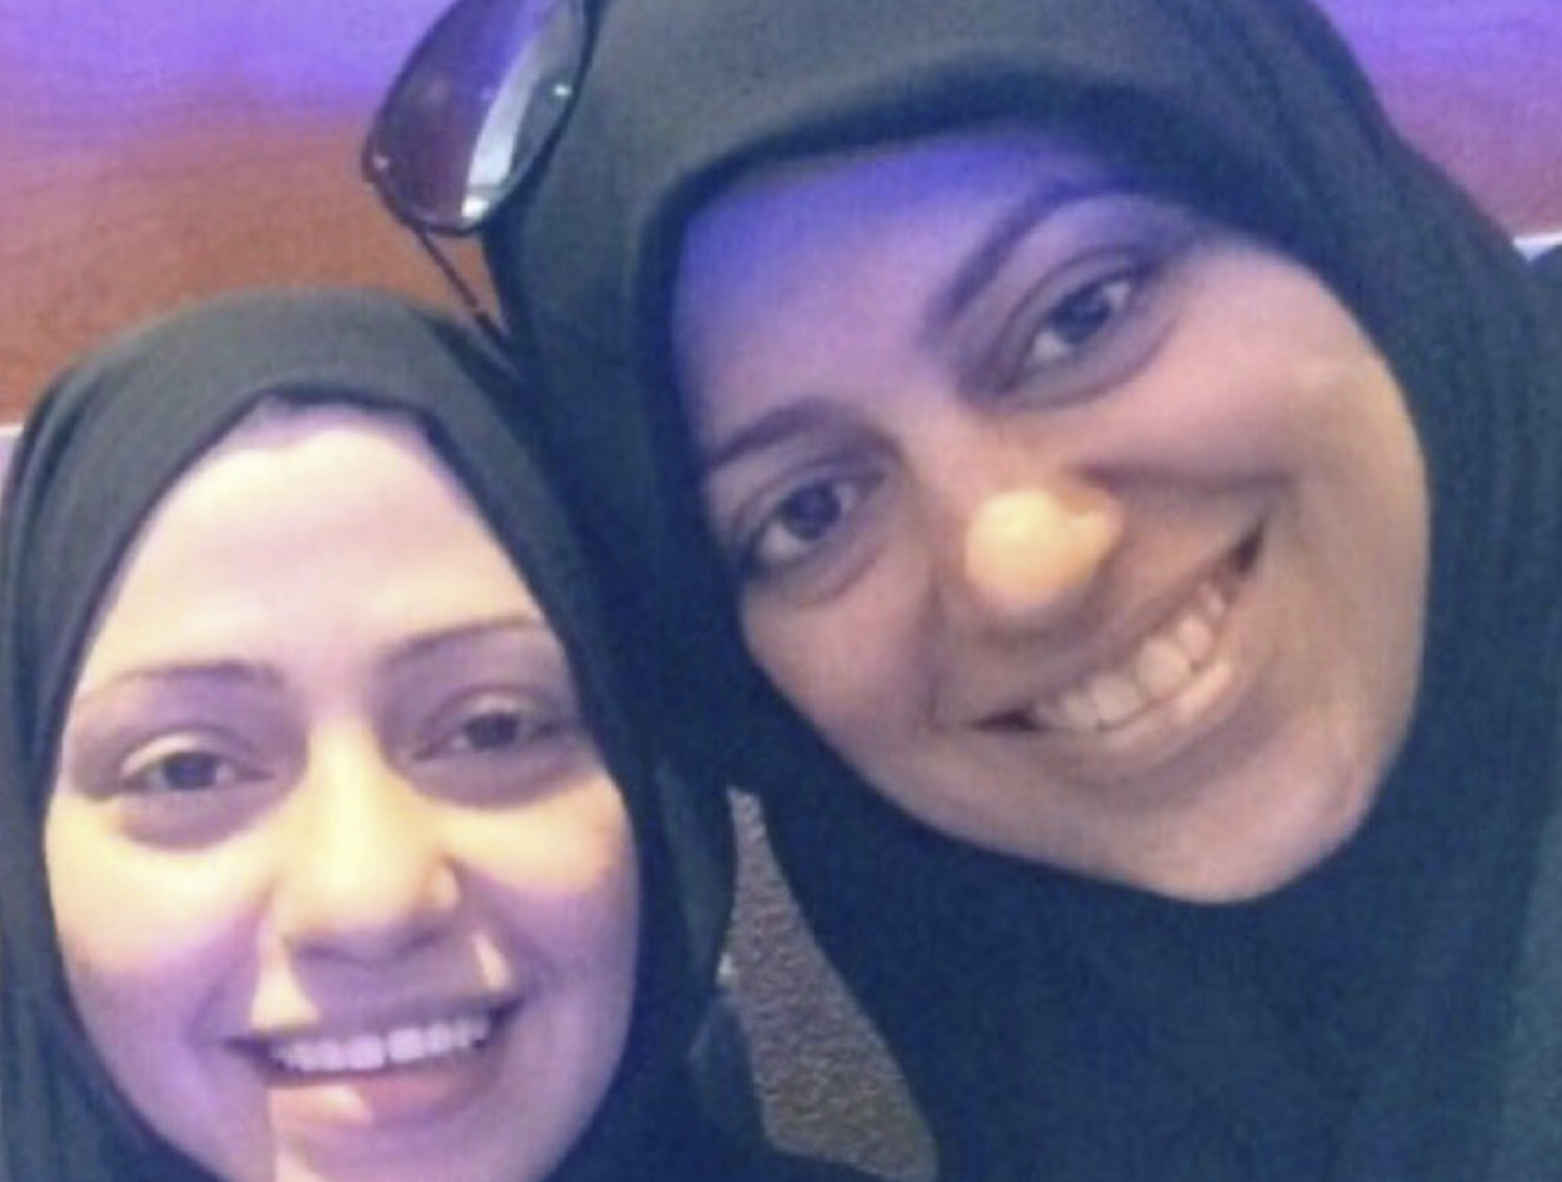 Saudi women's rights activists Badawi and al-Sadah are free